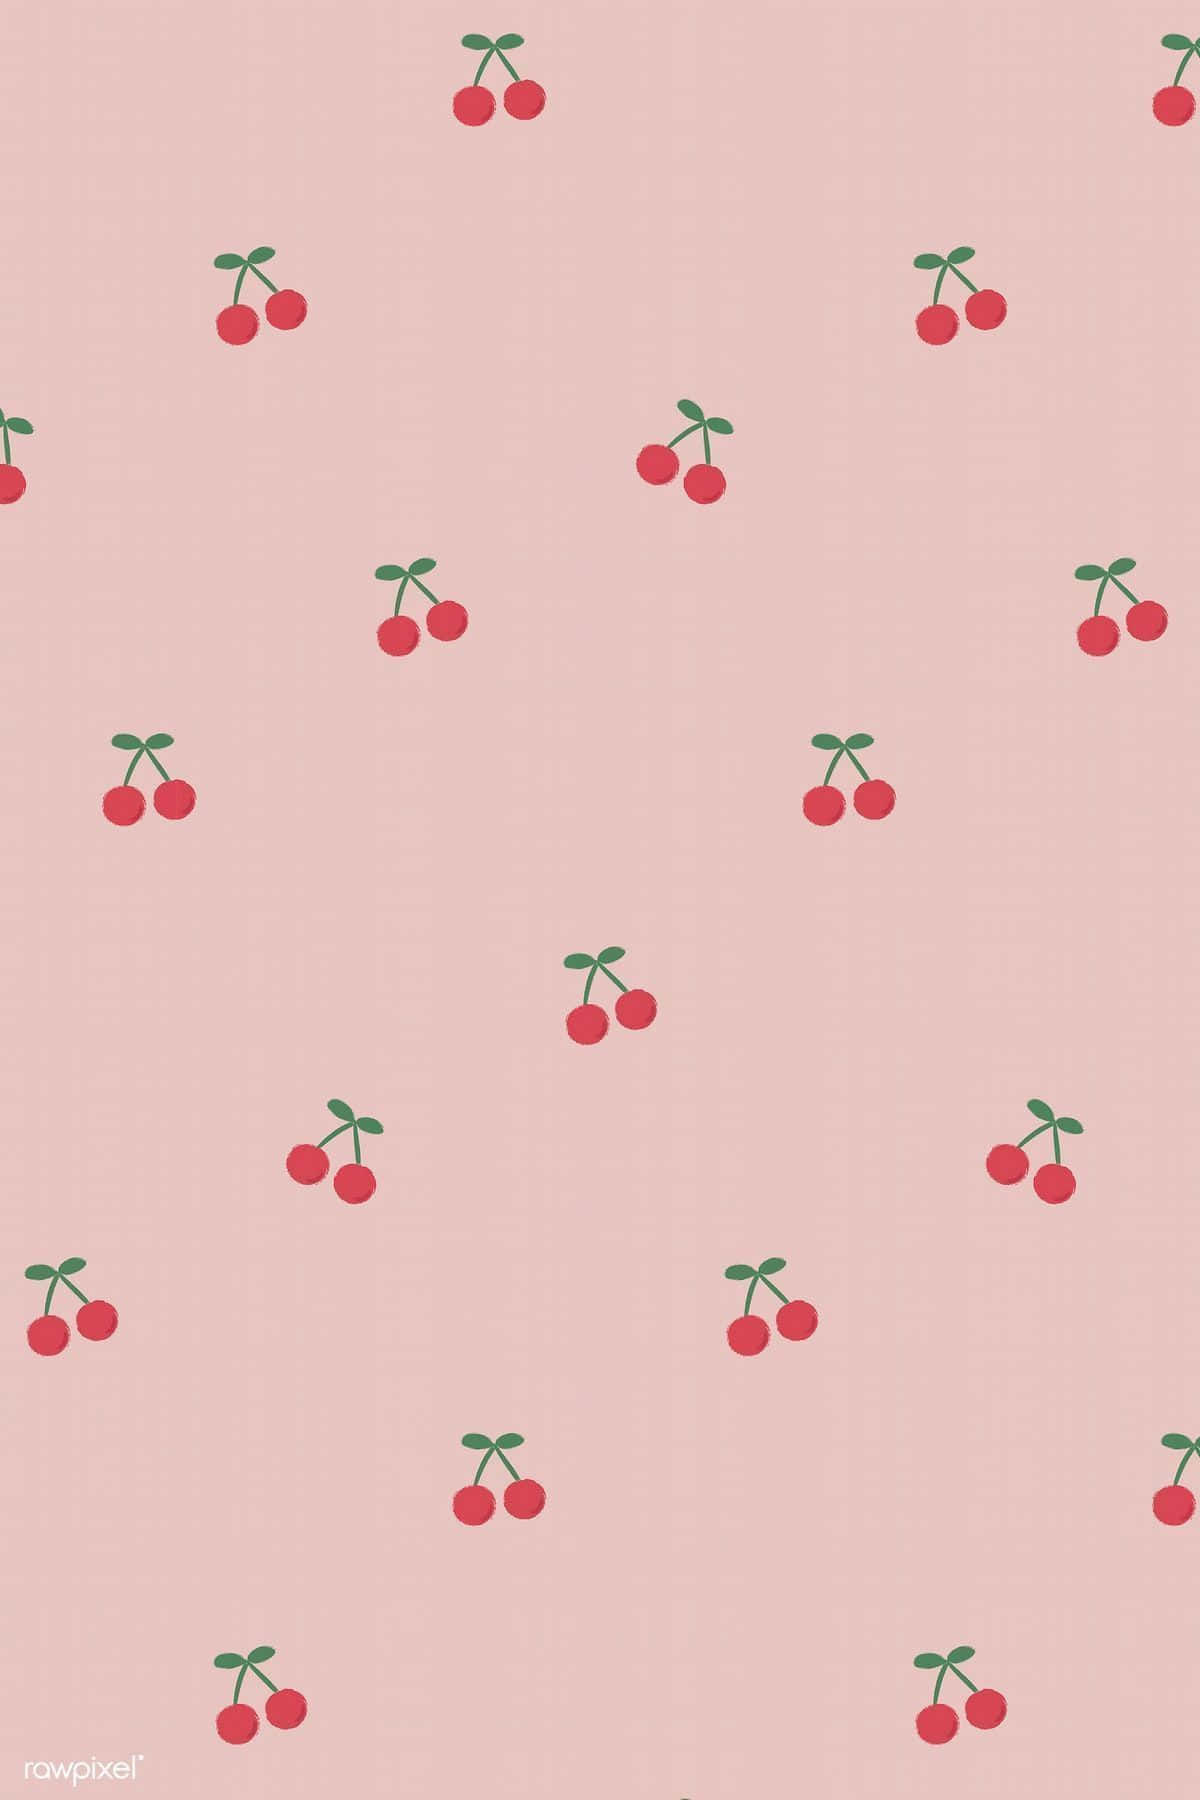 Best 100 Preppy Wallpaper  Pink Preppy Wallpaper  Preppy Wallpaper iPad   Preppy Wallpaper Smiley Face  Preppy Wallpaper Aesthetic  Mixing  Images